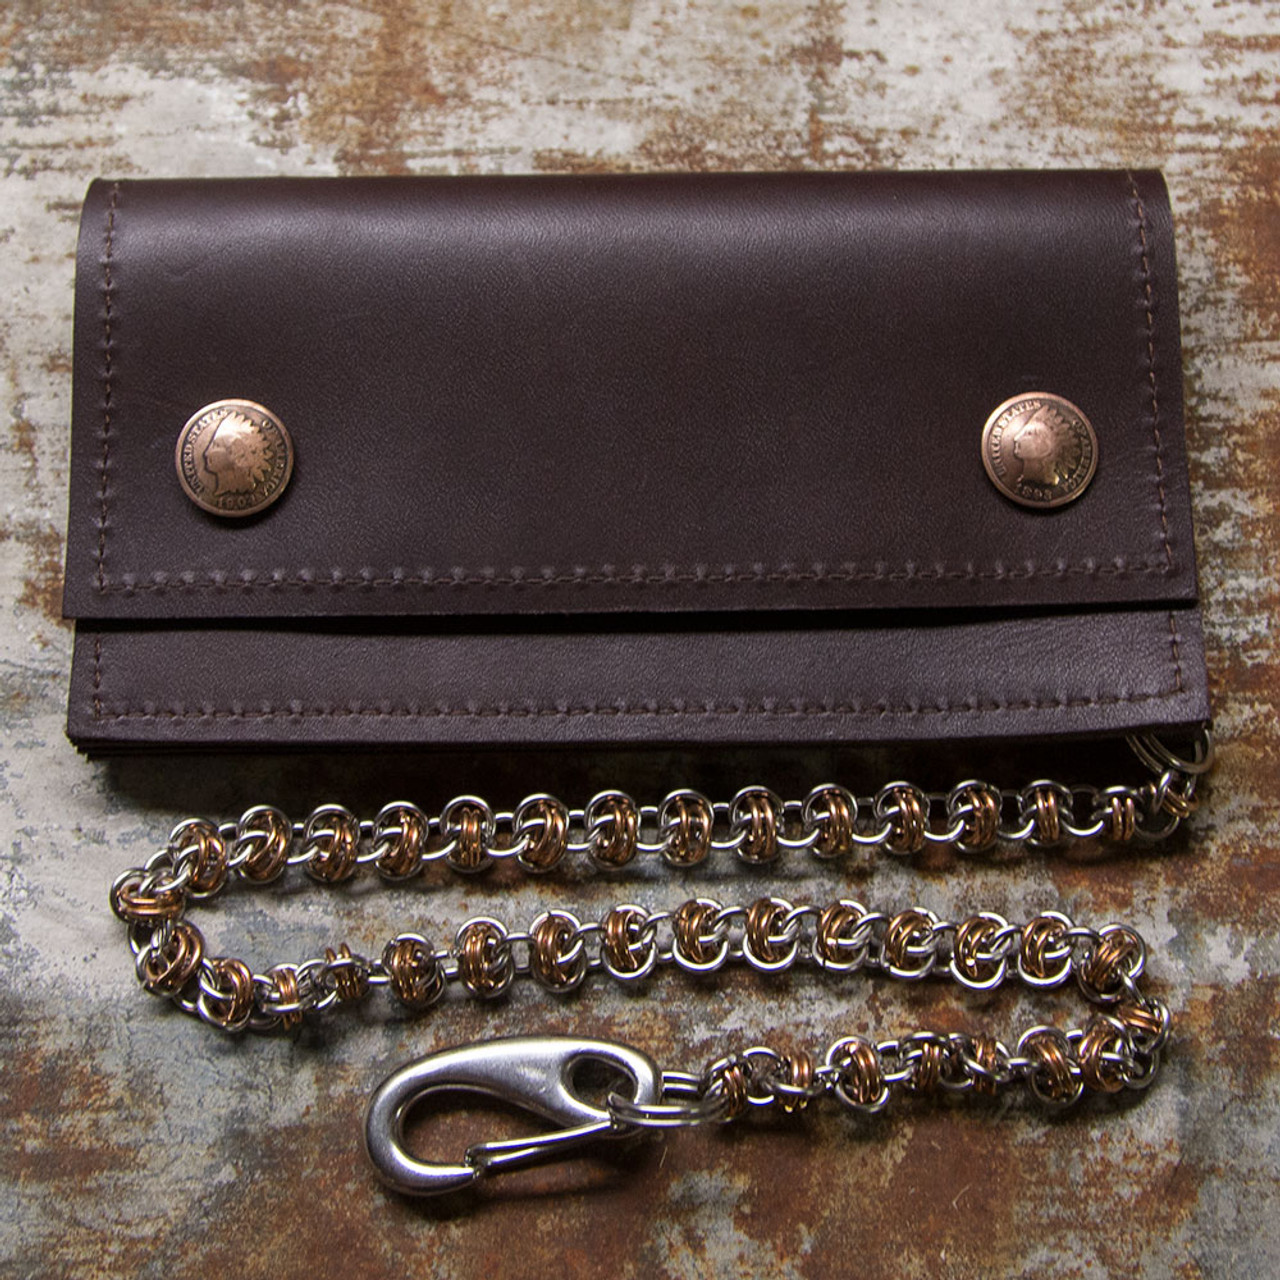  Handmade pink pebble grain genuine leather key